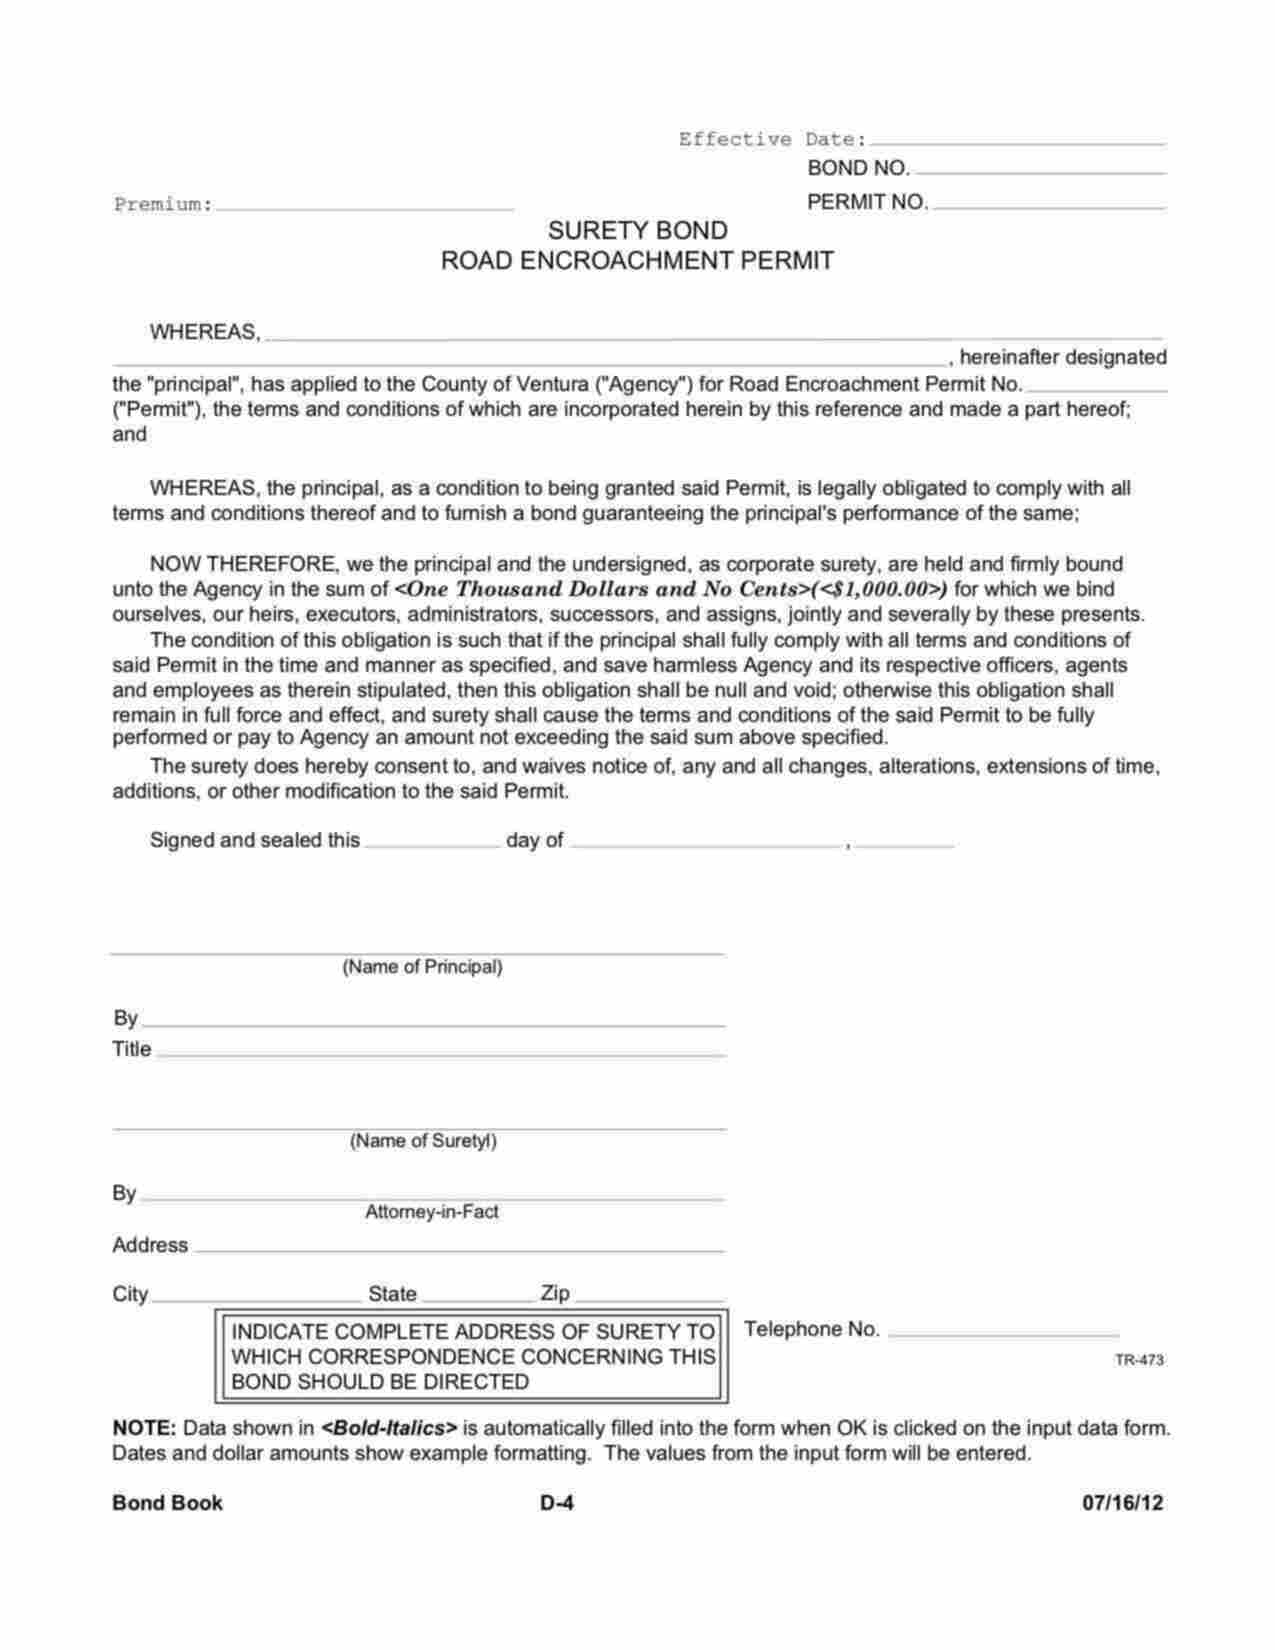 California Road Encroachment Permit Bond Form